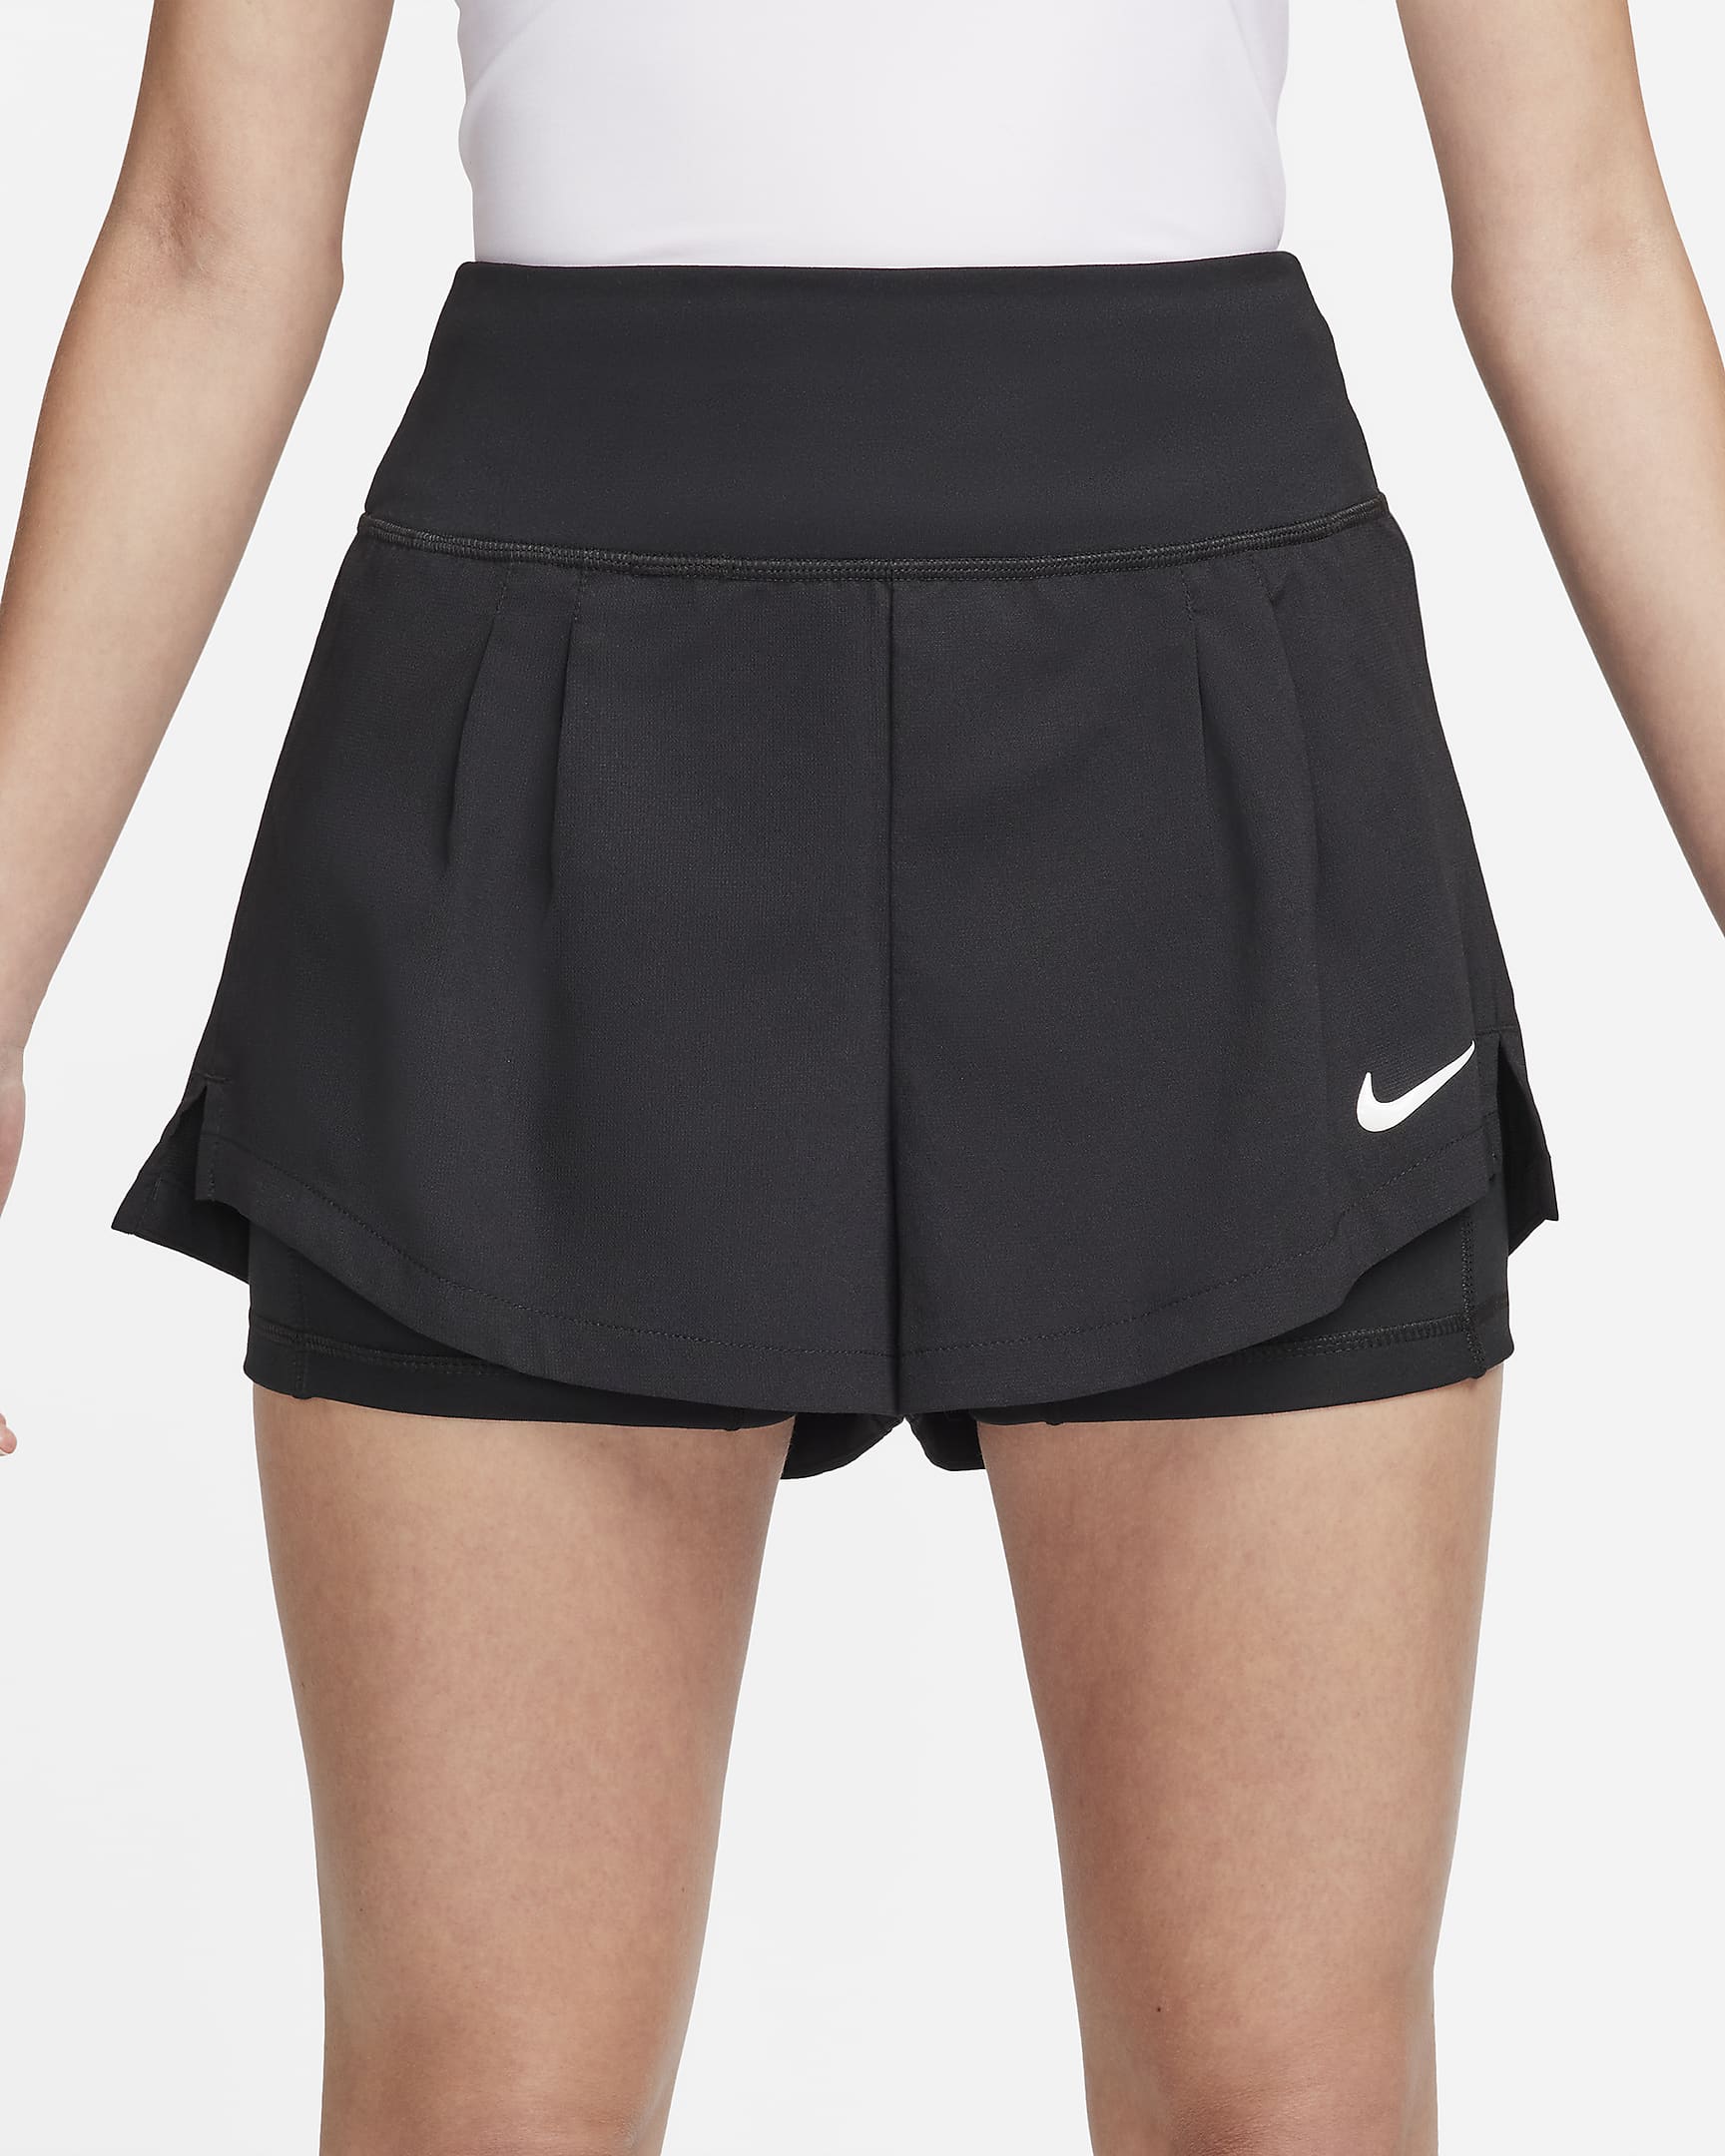 NikeCourt Advantage Women's Shorts - Black/Black/White